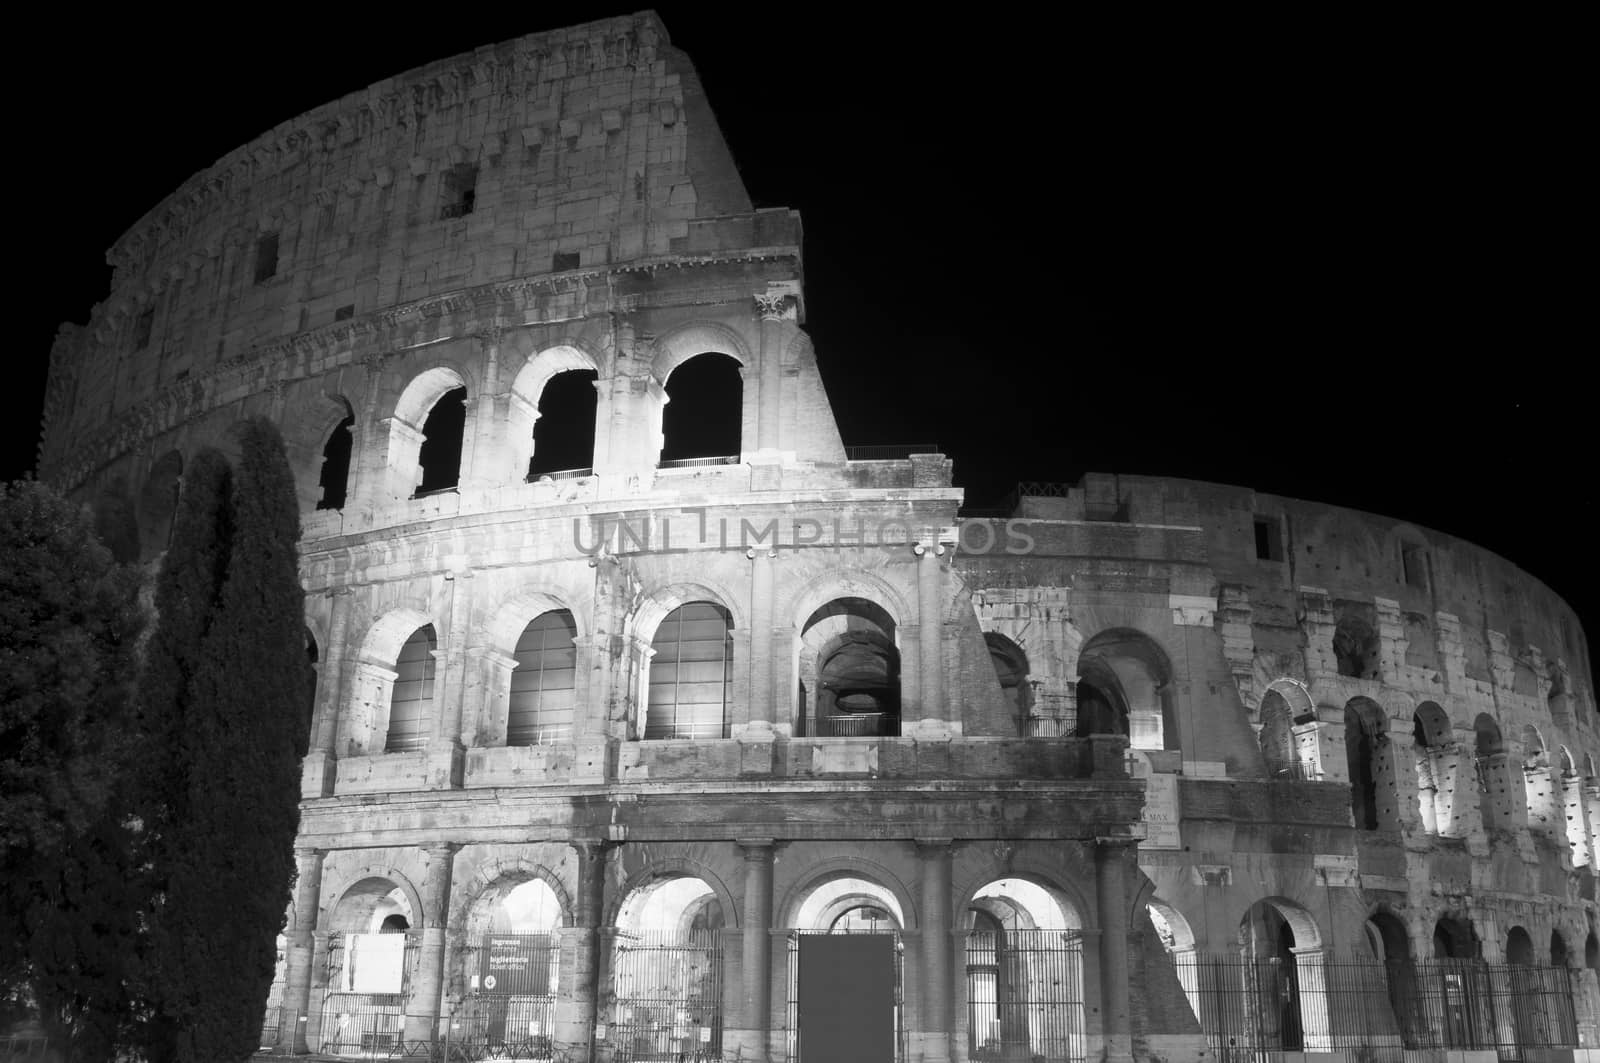 coliseum at night by antonio.li